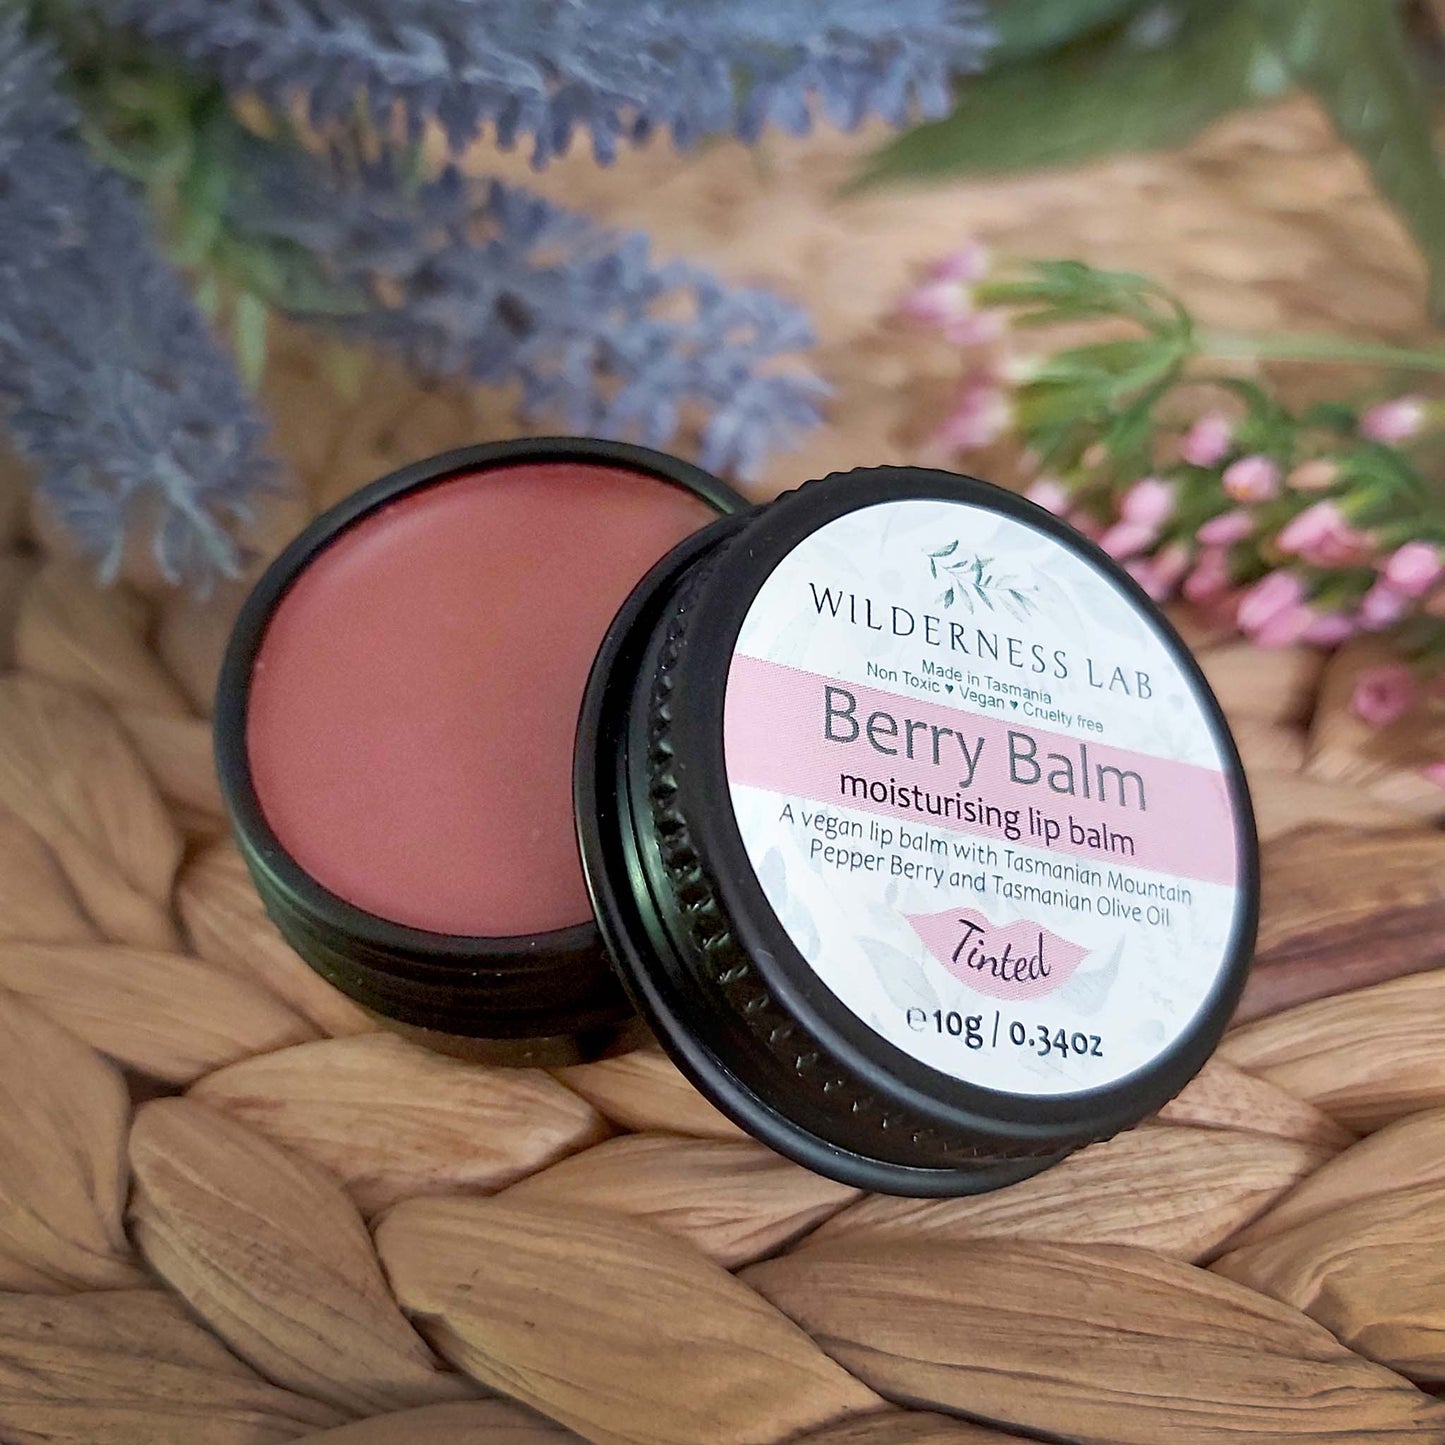 Berry Balm - Tinted. Vegan lip balm with Tasmanian Mountain Pepper Berry